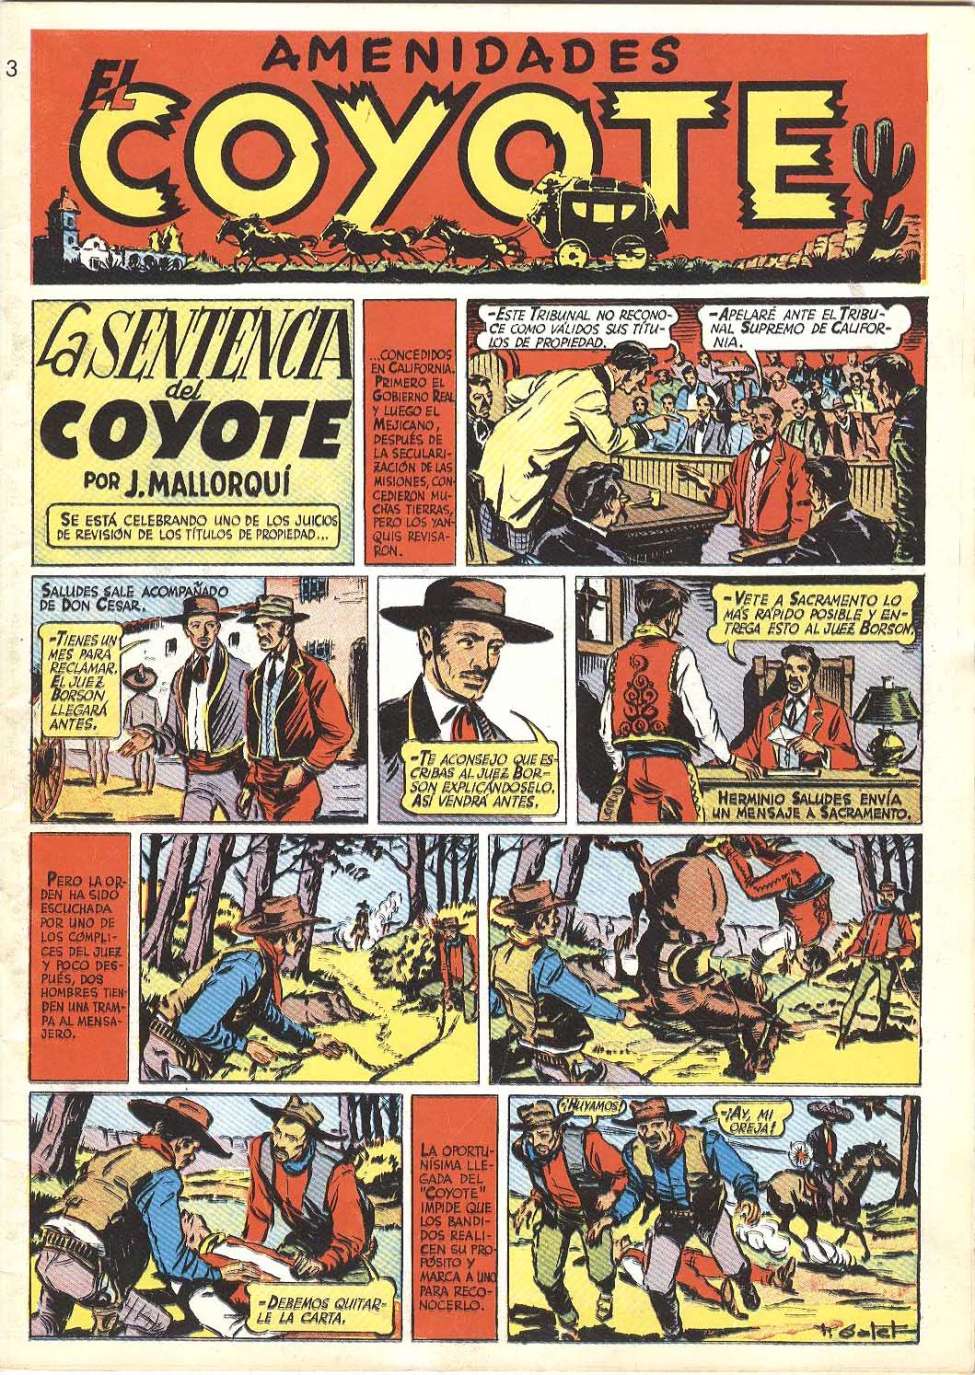 Comic Book Cover For El Coyote 3 - La Sentencia del Coyote